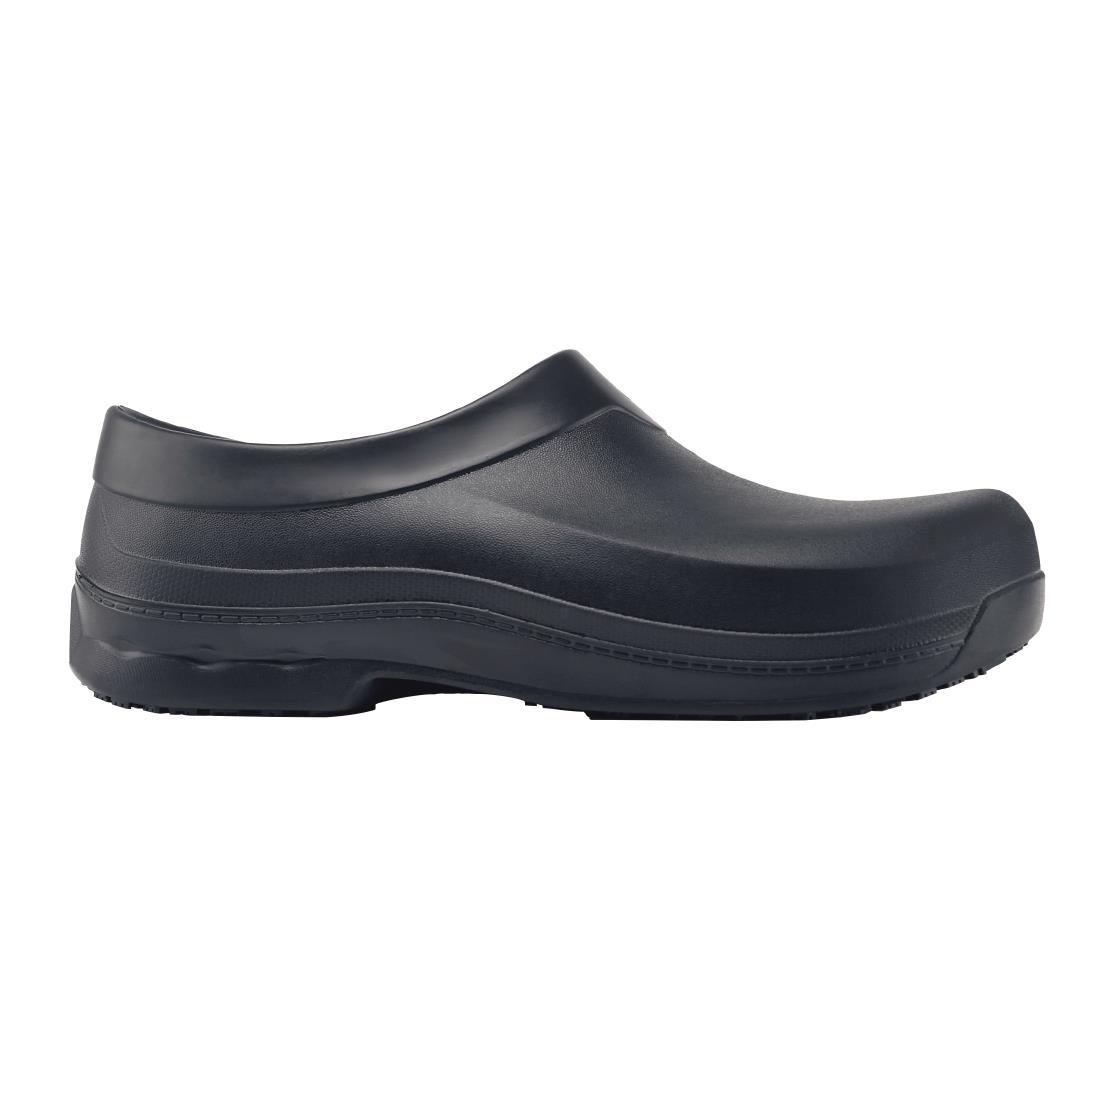 Shoes for Crews Radium Clogs Black Size 45 - BB581-45  - 1